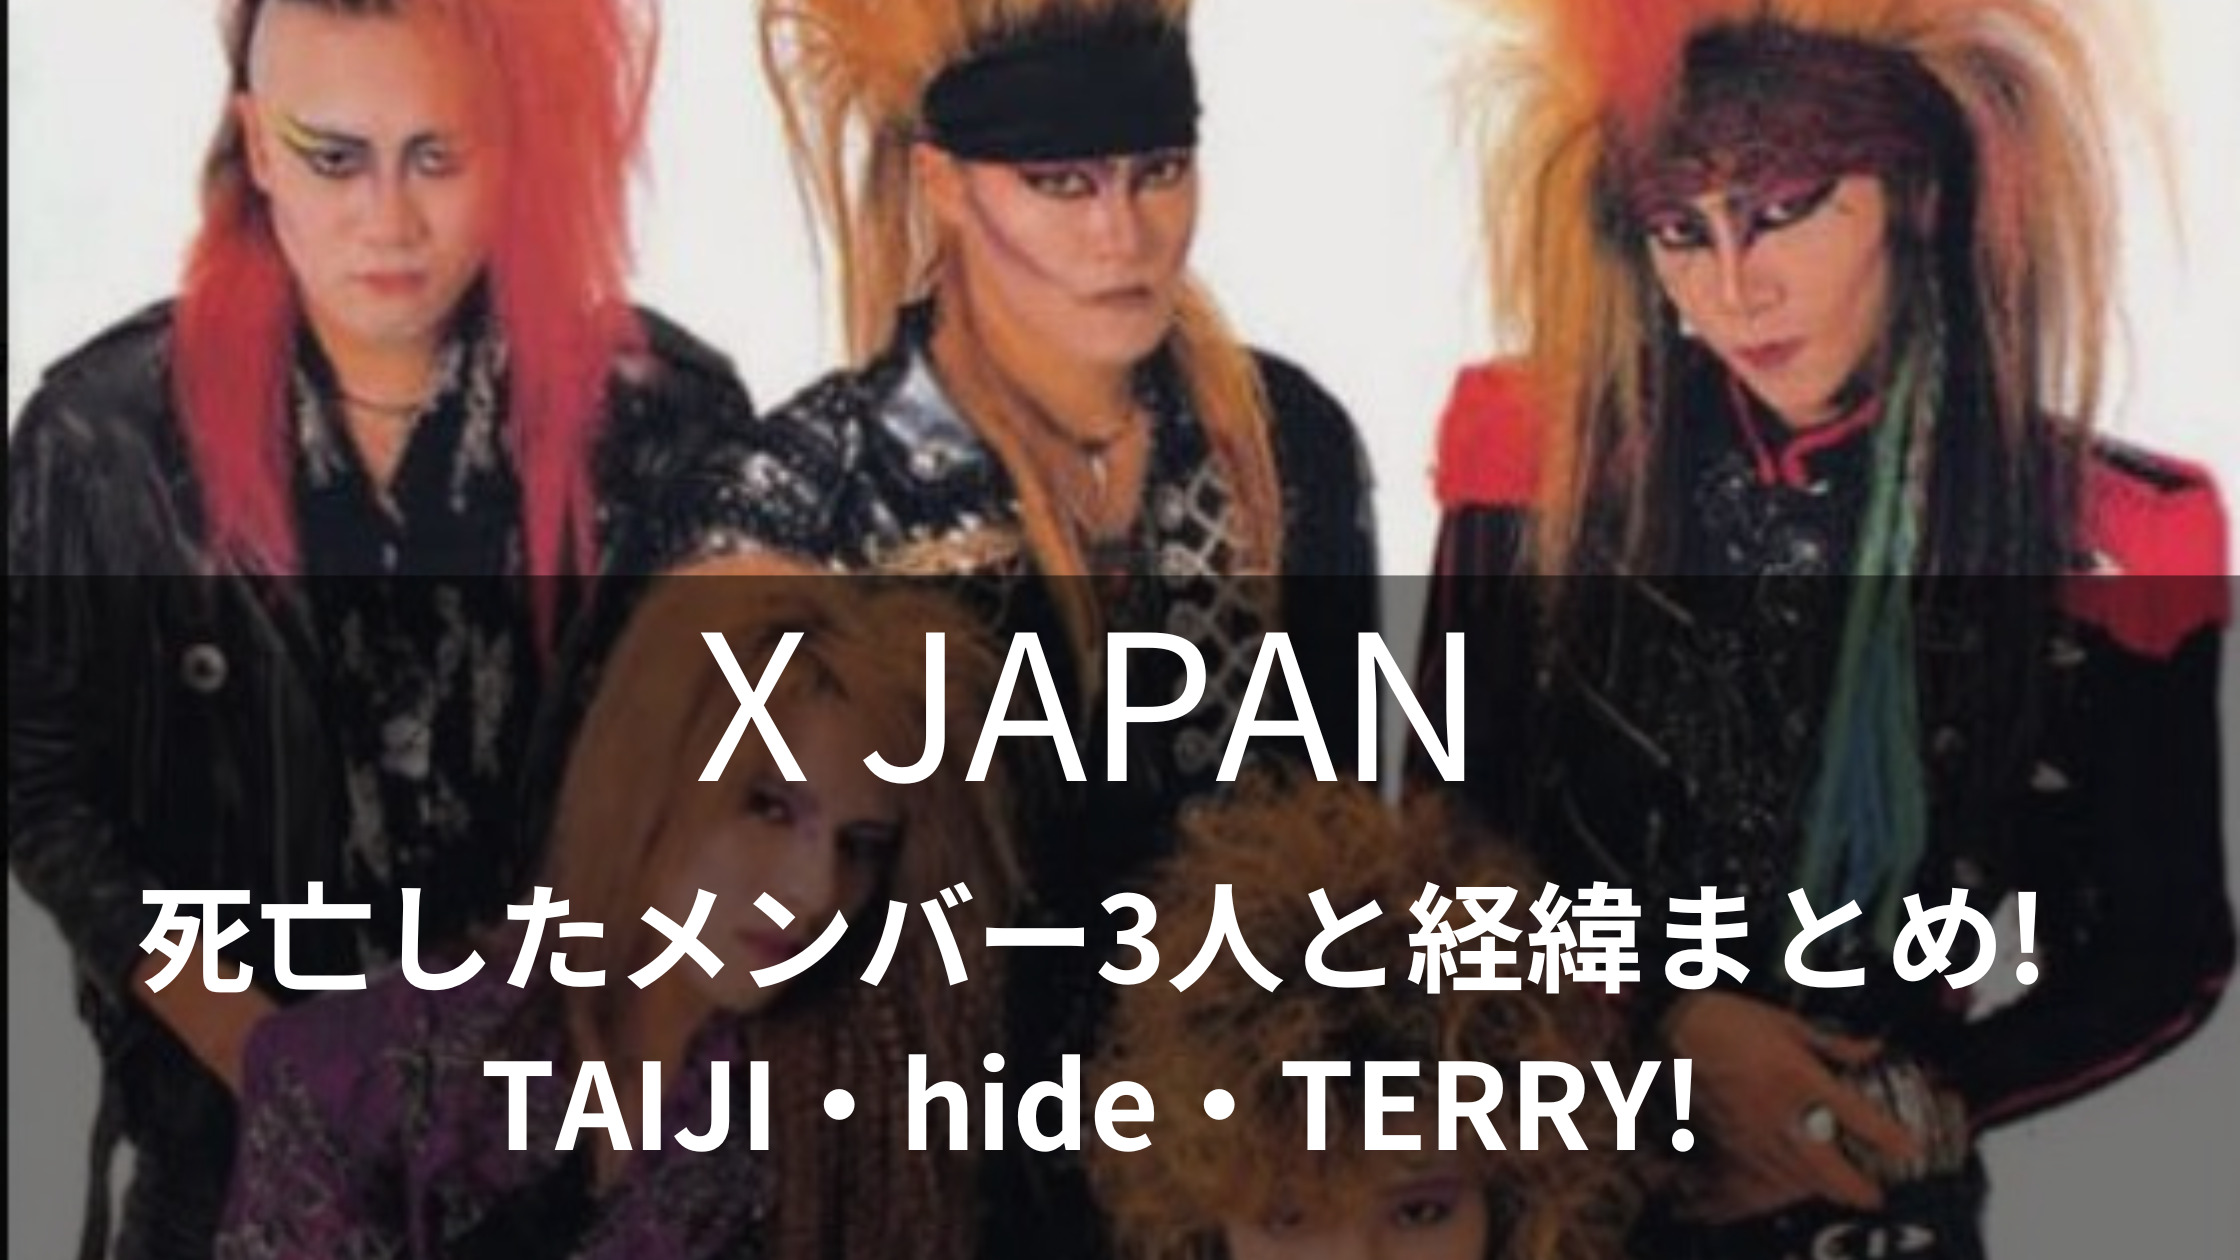 X JAPANの死亡したメンバー3人と経緯まとめ!TAIJI・hide・TERRY!